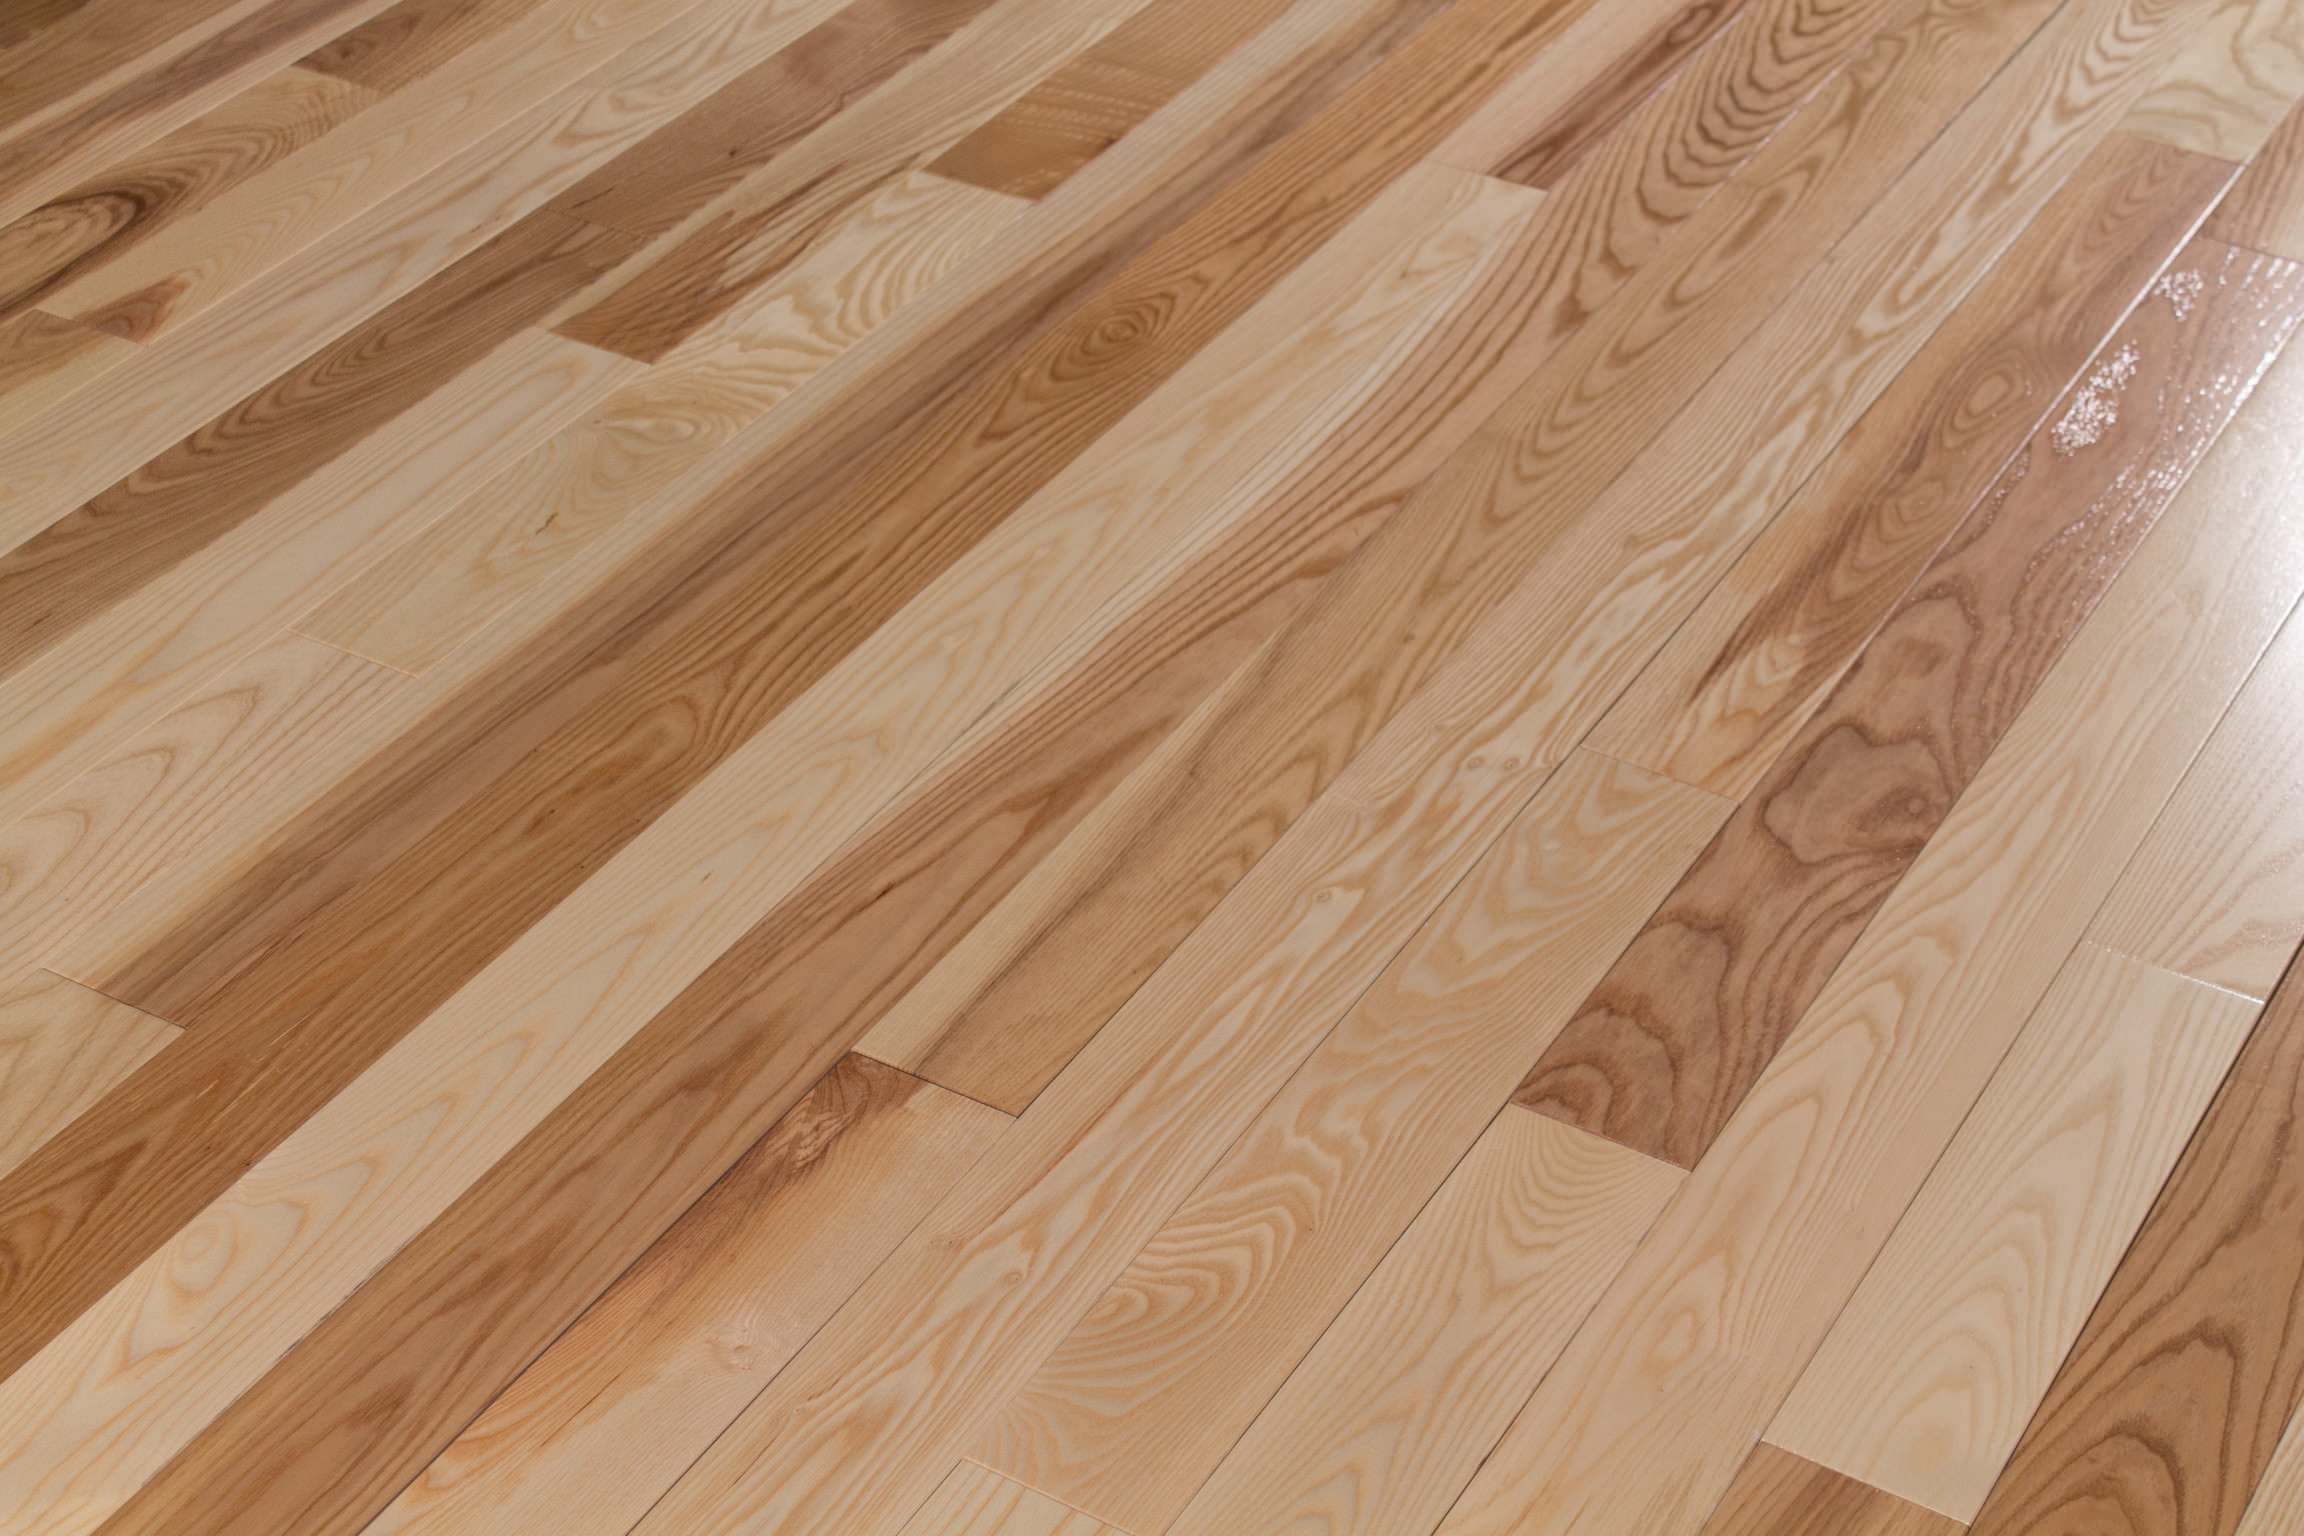 Domestic Hardwood Flooring Guide, Is White Ash Good For Flooring